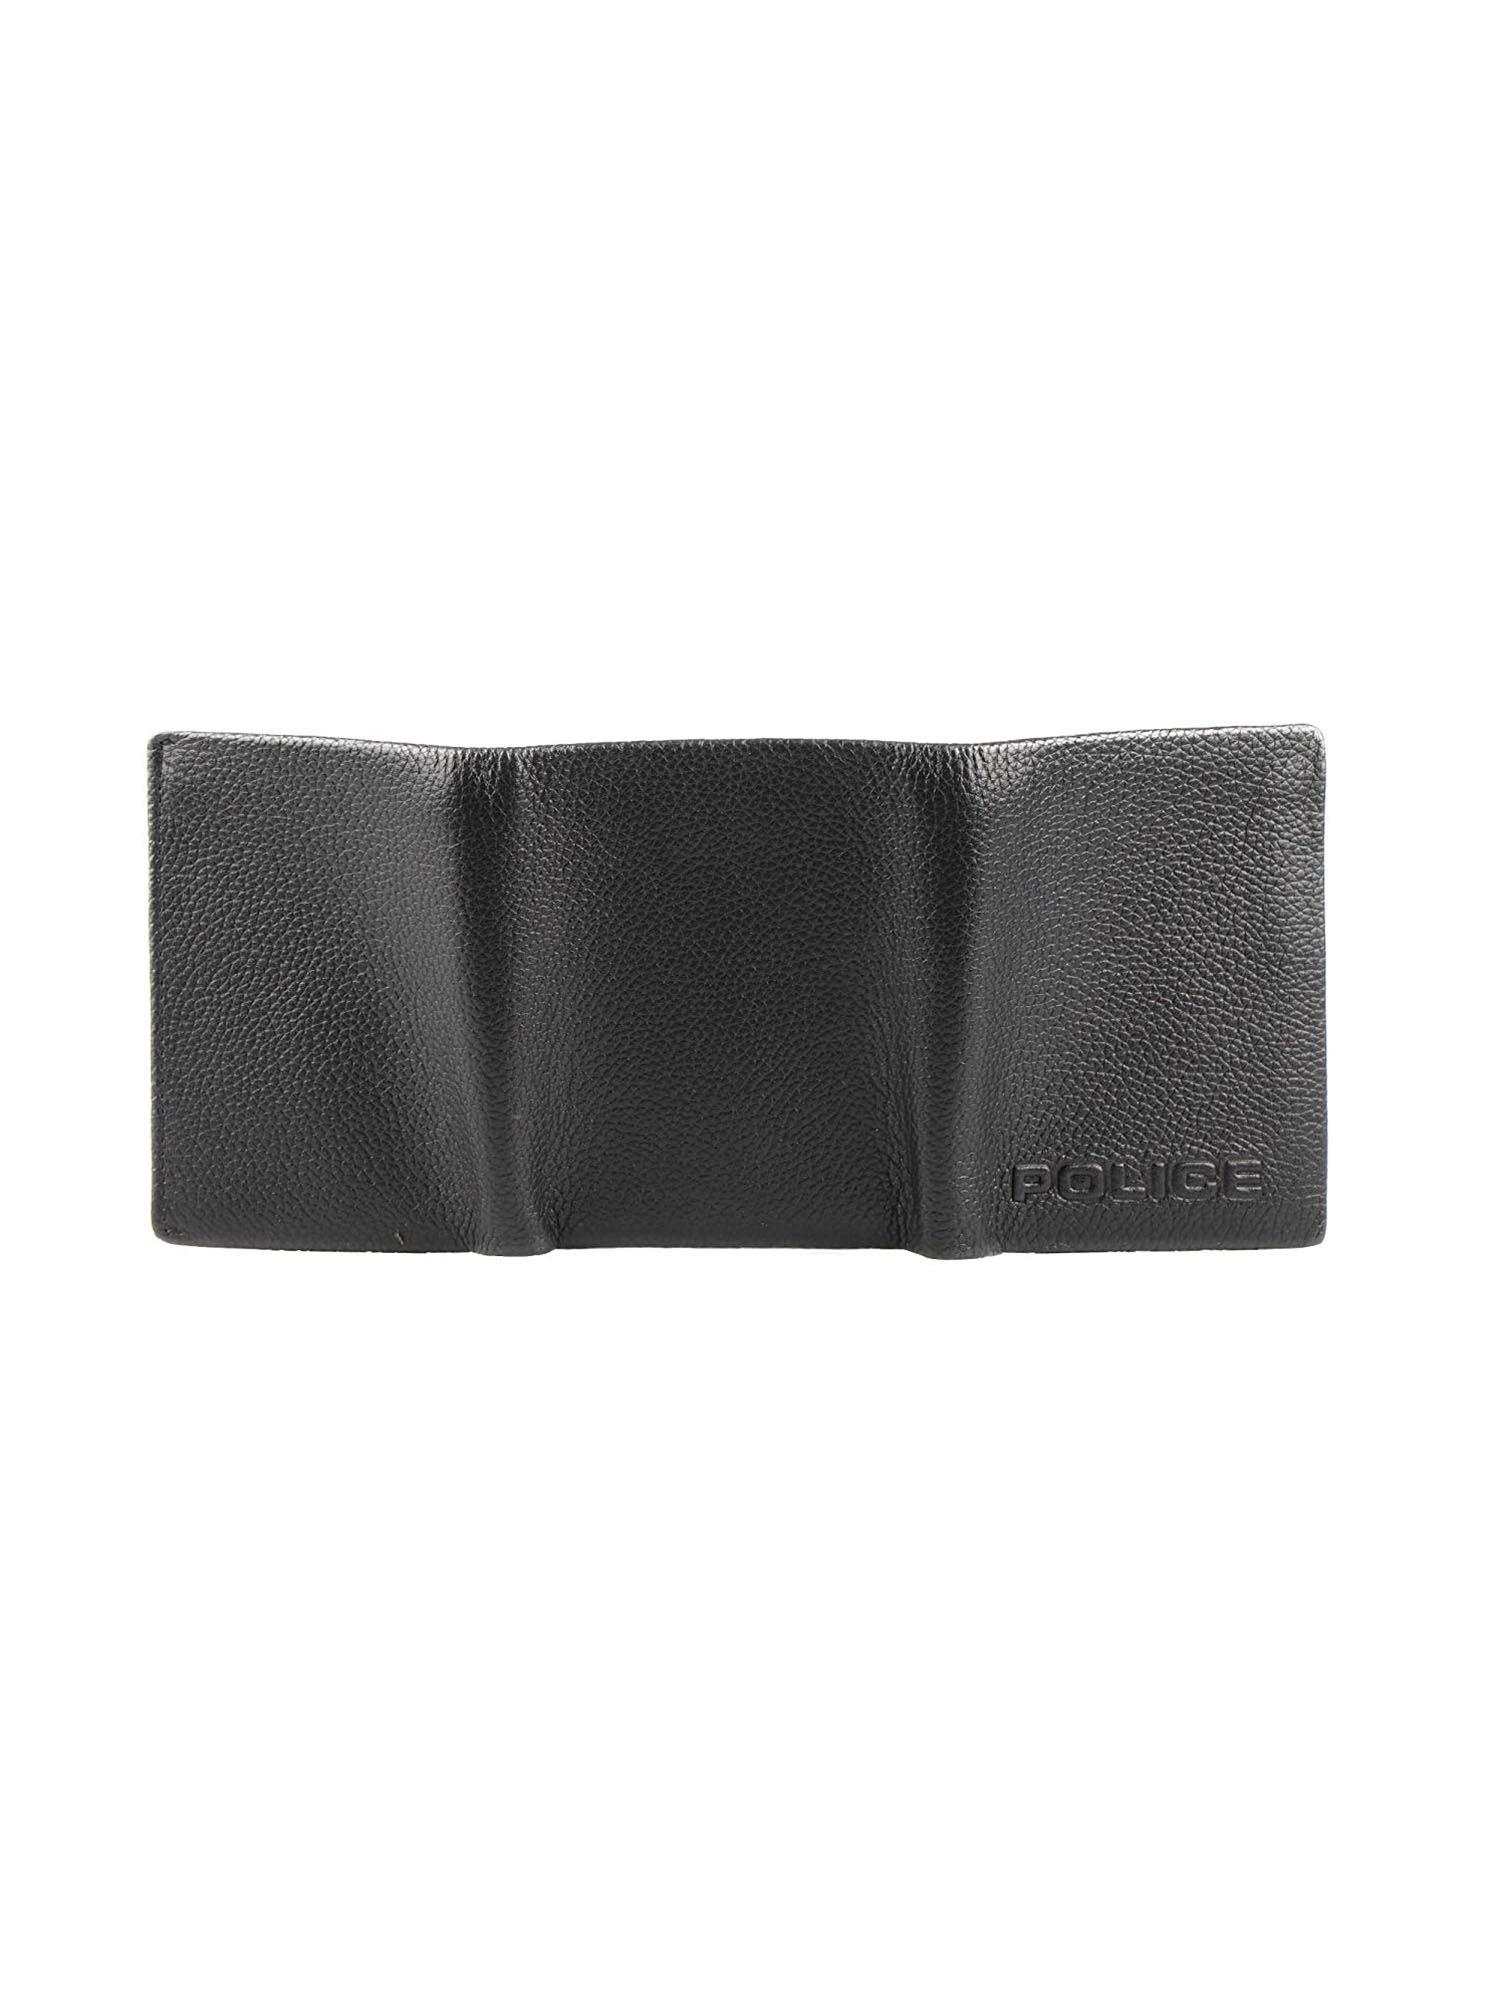 cruiser tri fold black leather men wallet